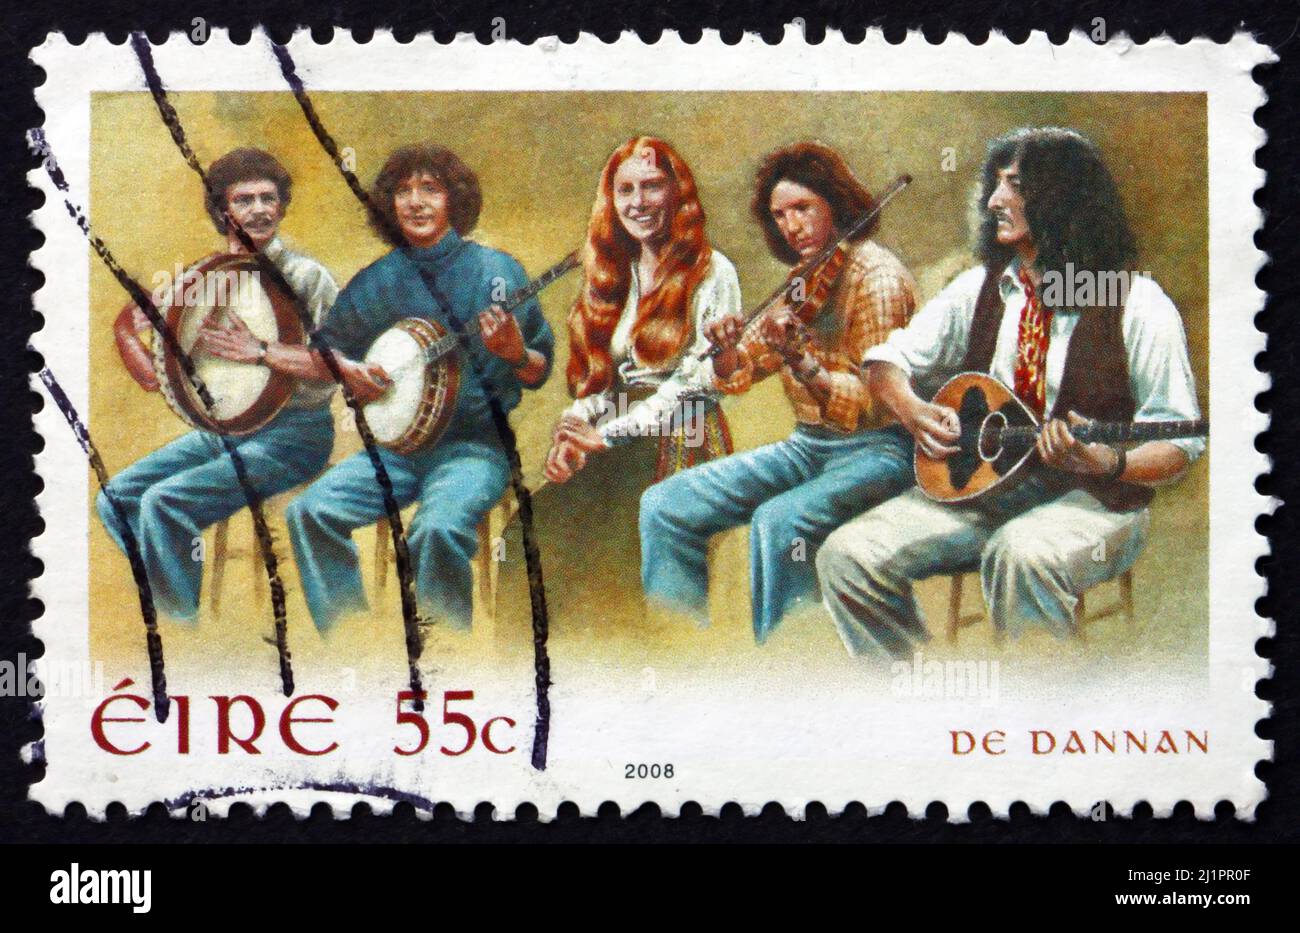 IRELAND - CIRCA 2008: A stamp printed in Ireland shows De Dannan, is an Irish Folk Music Group, circa 2008 Stock Photo